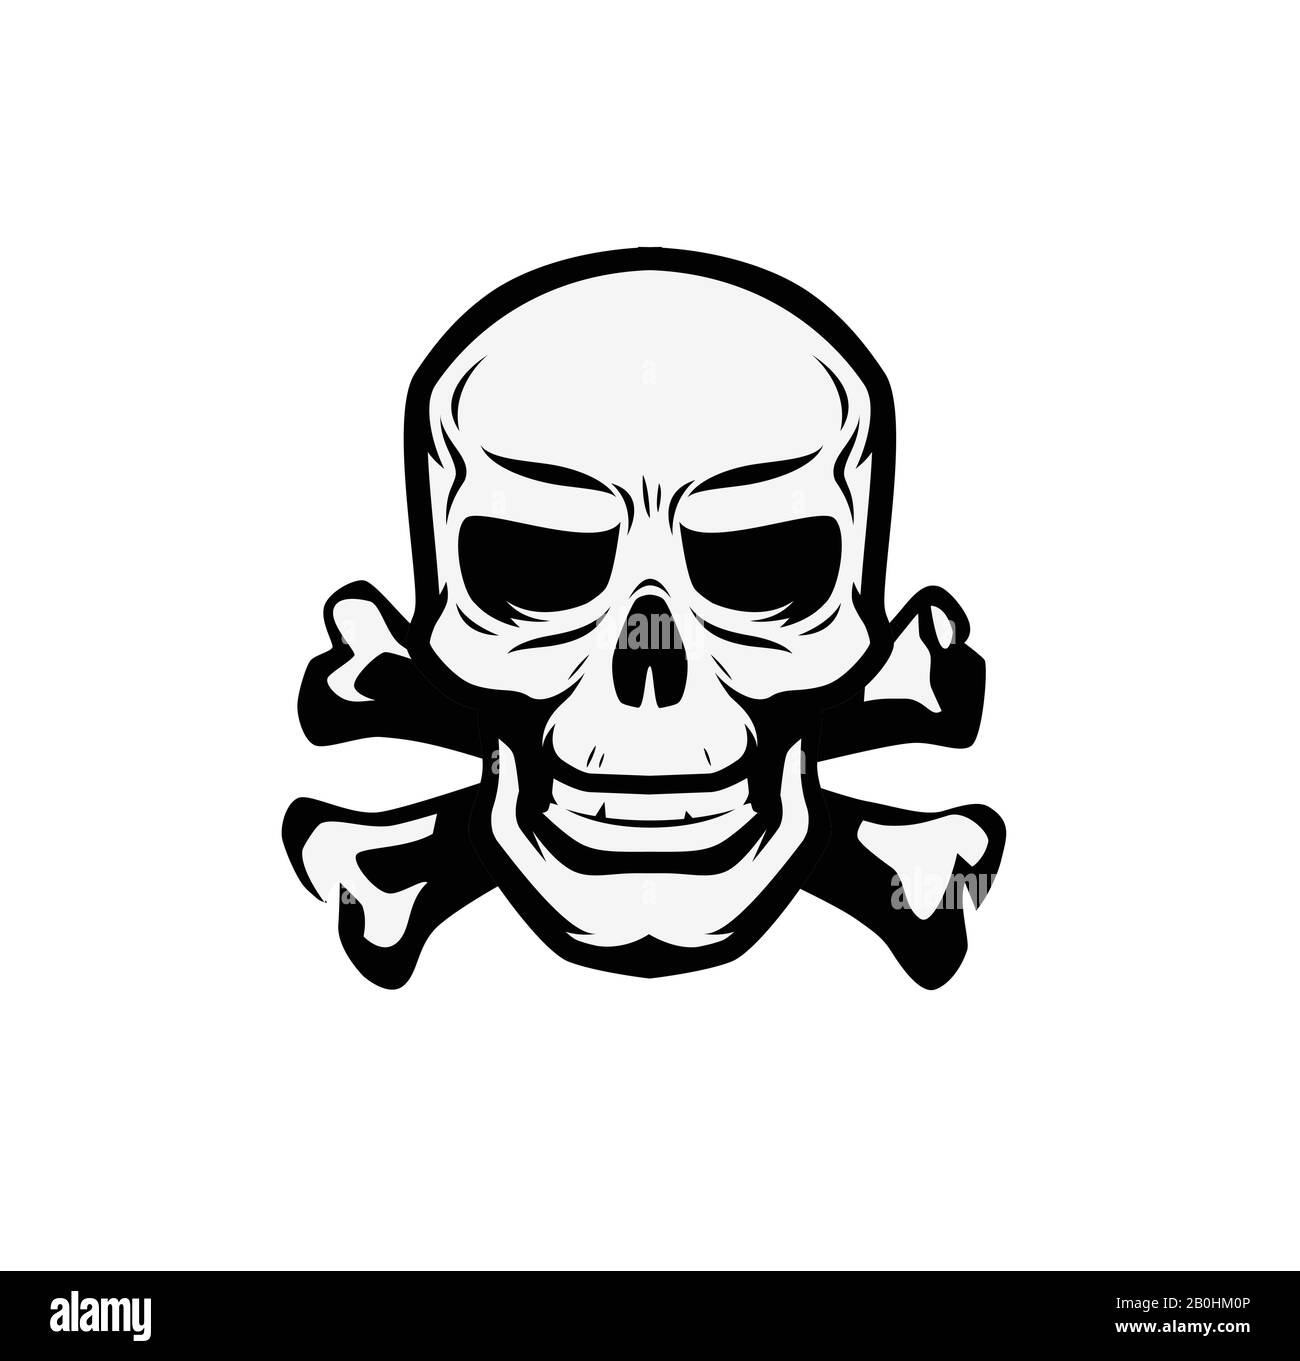 Schädel und Kreuzknochen Symbol. Jolly Roger, Pirate Emblem Vektor-Illustration Stock Vektor